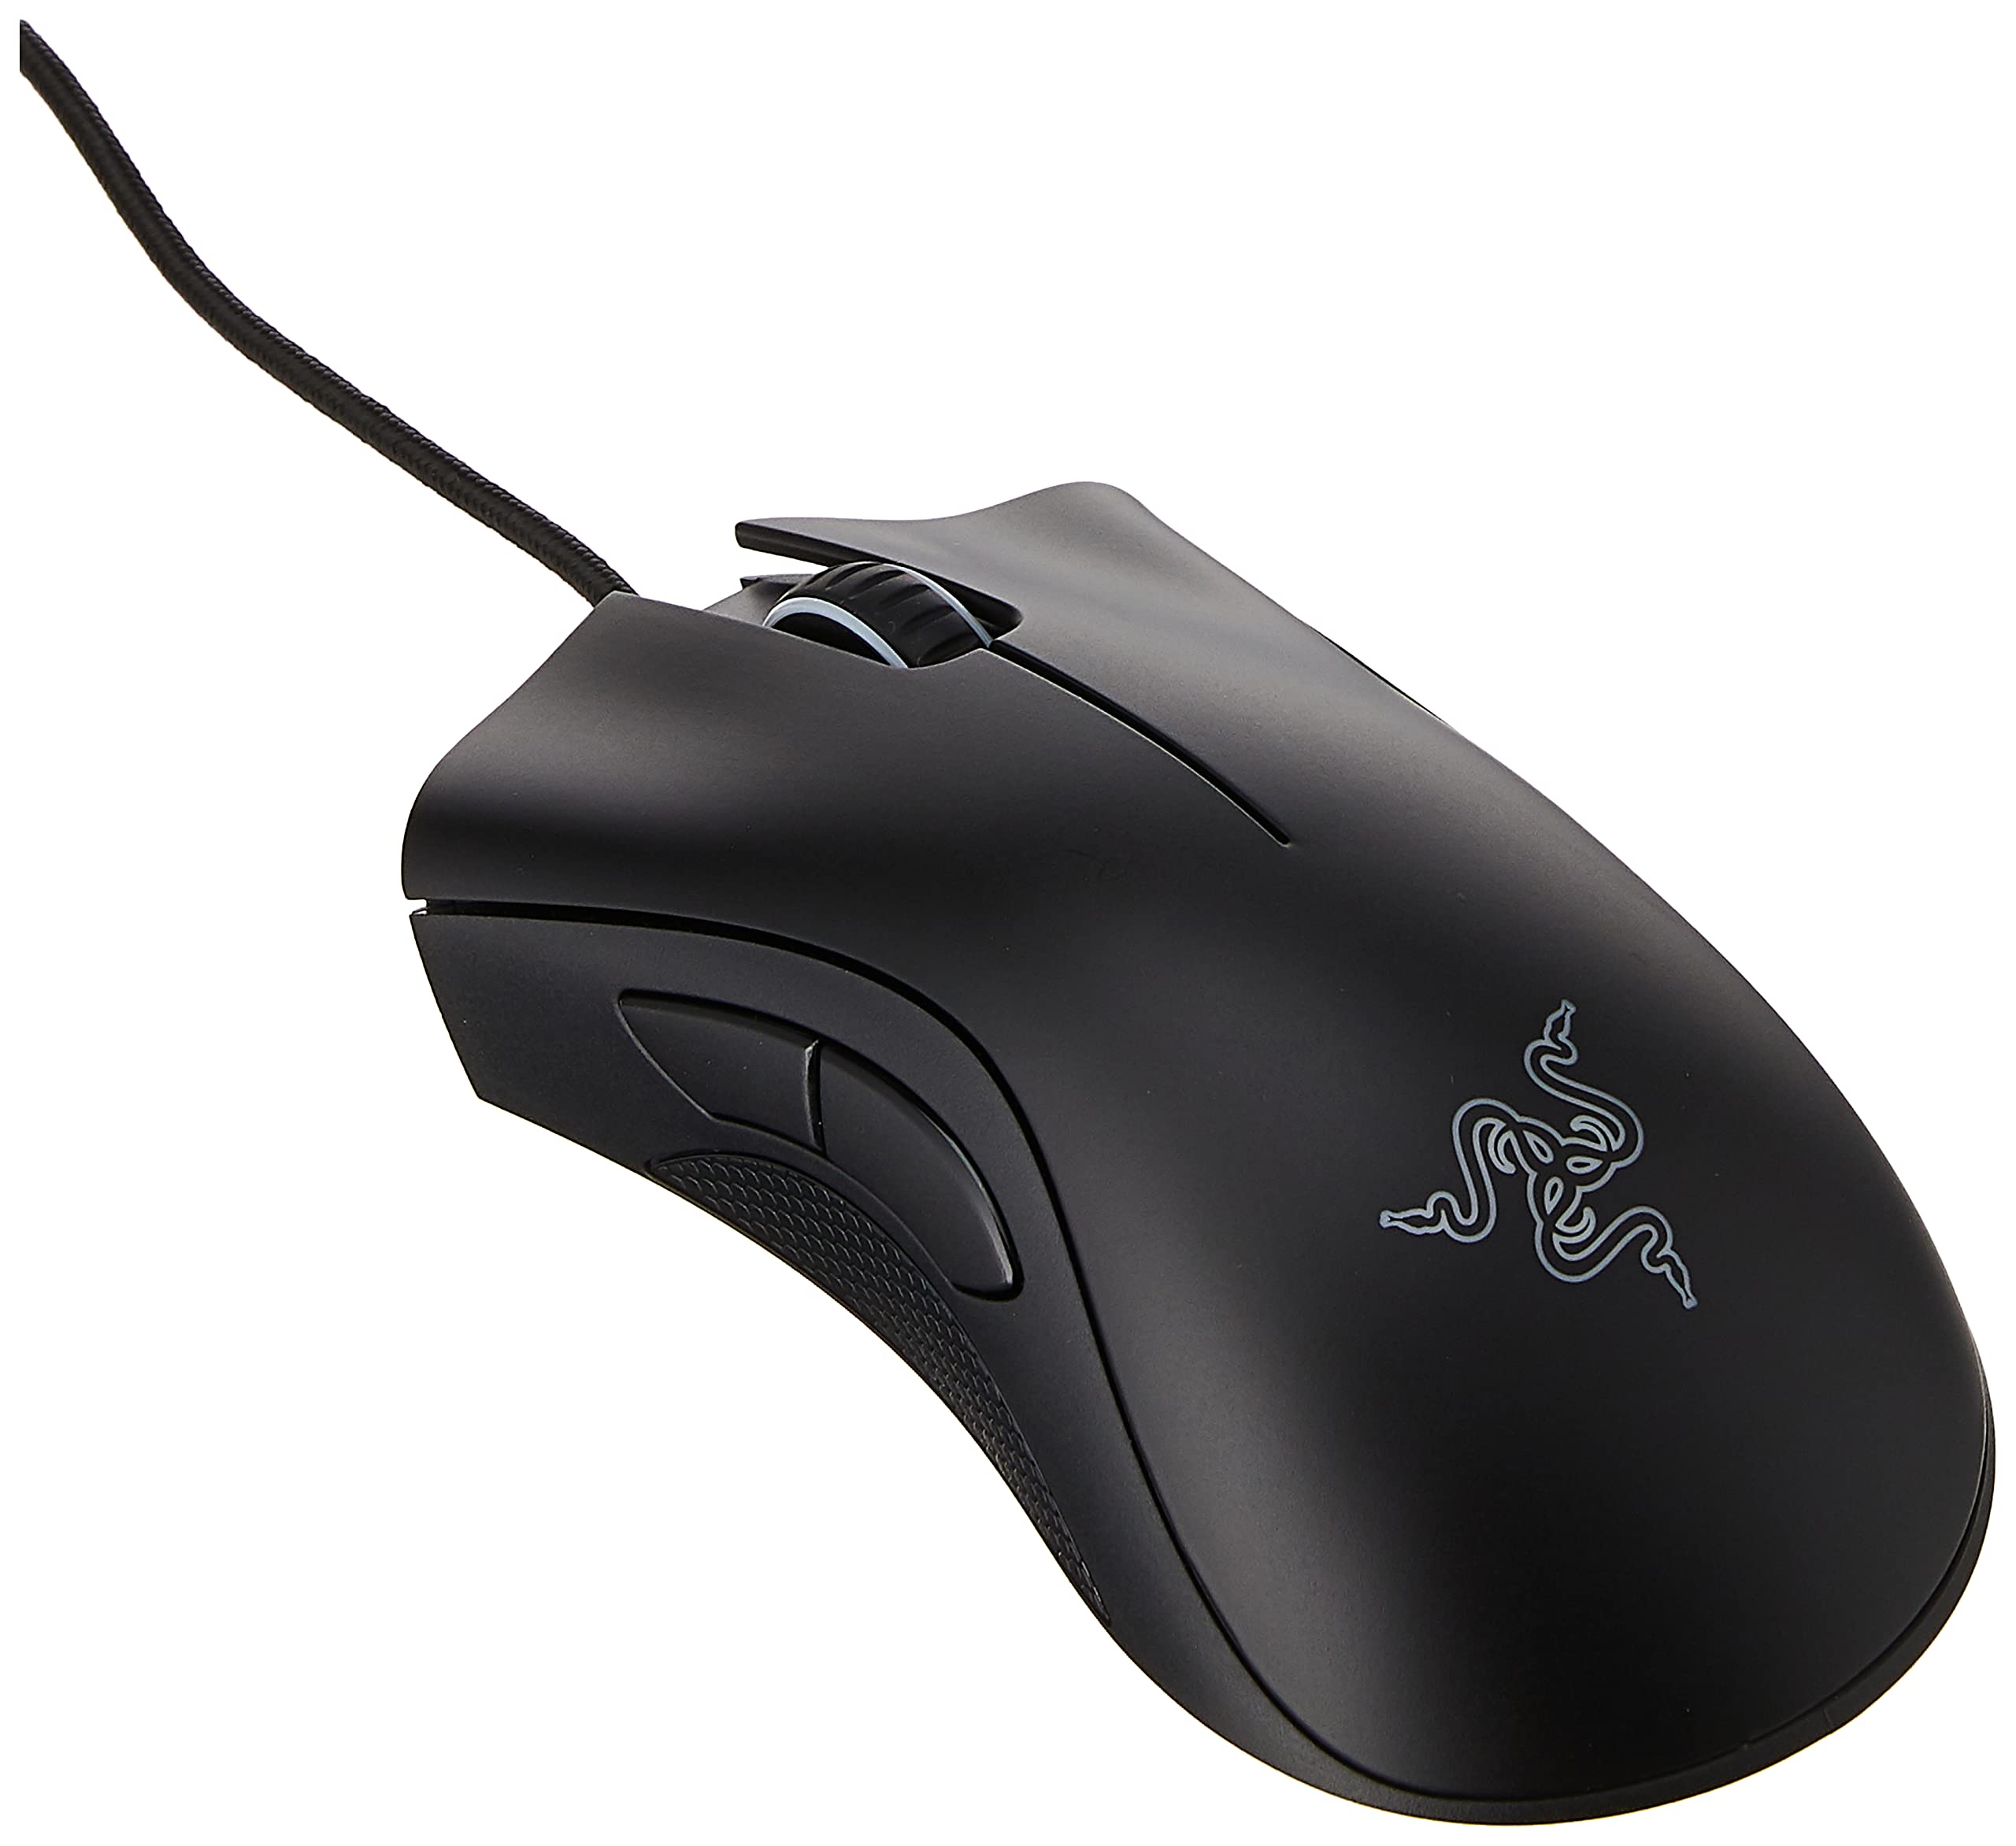 Razer Gaming Mouse (2018 Model)